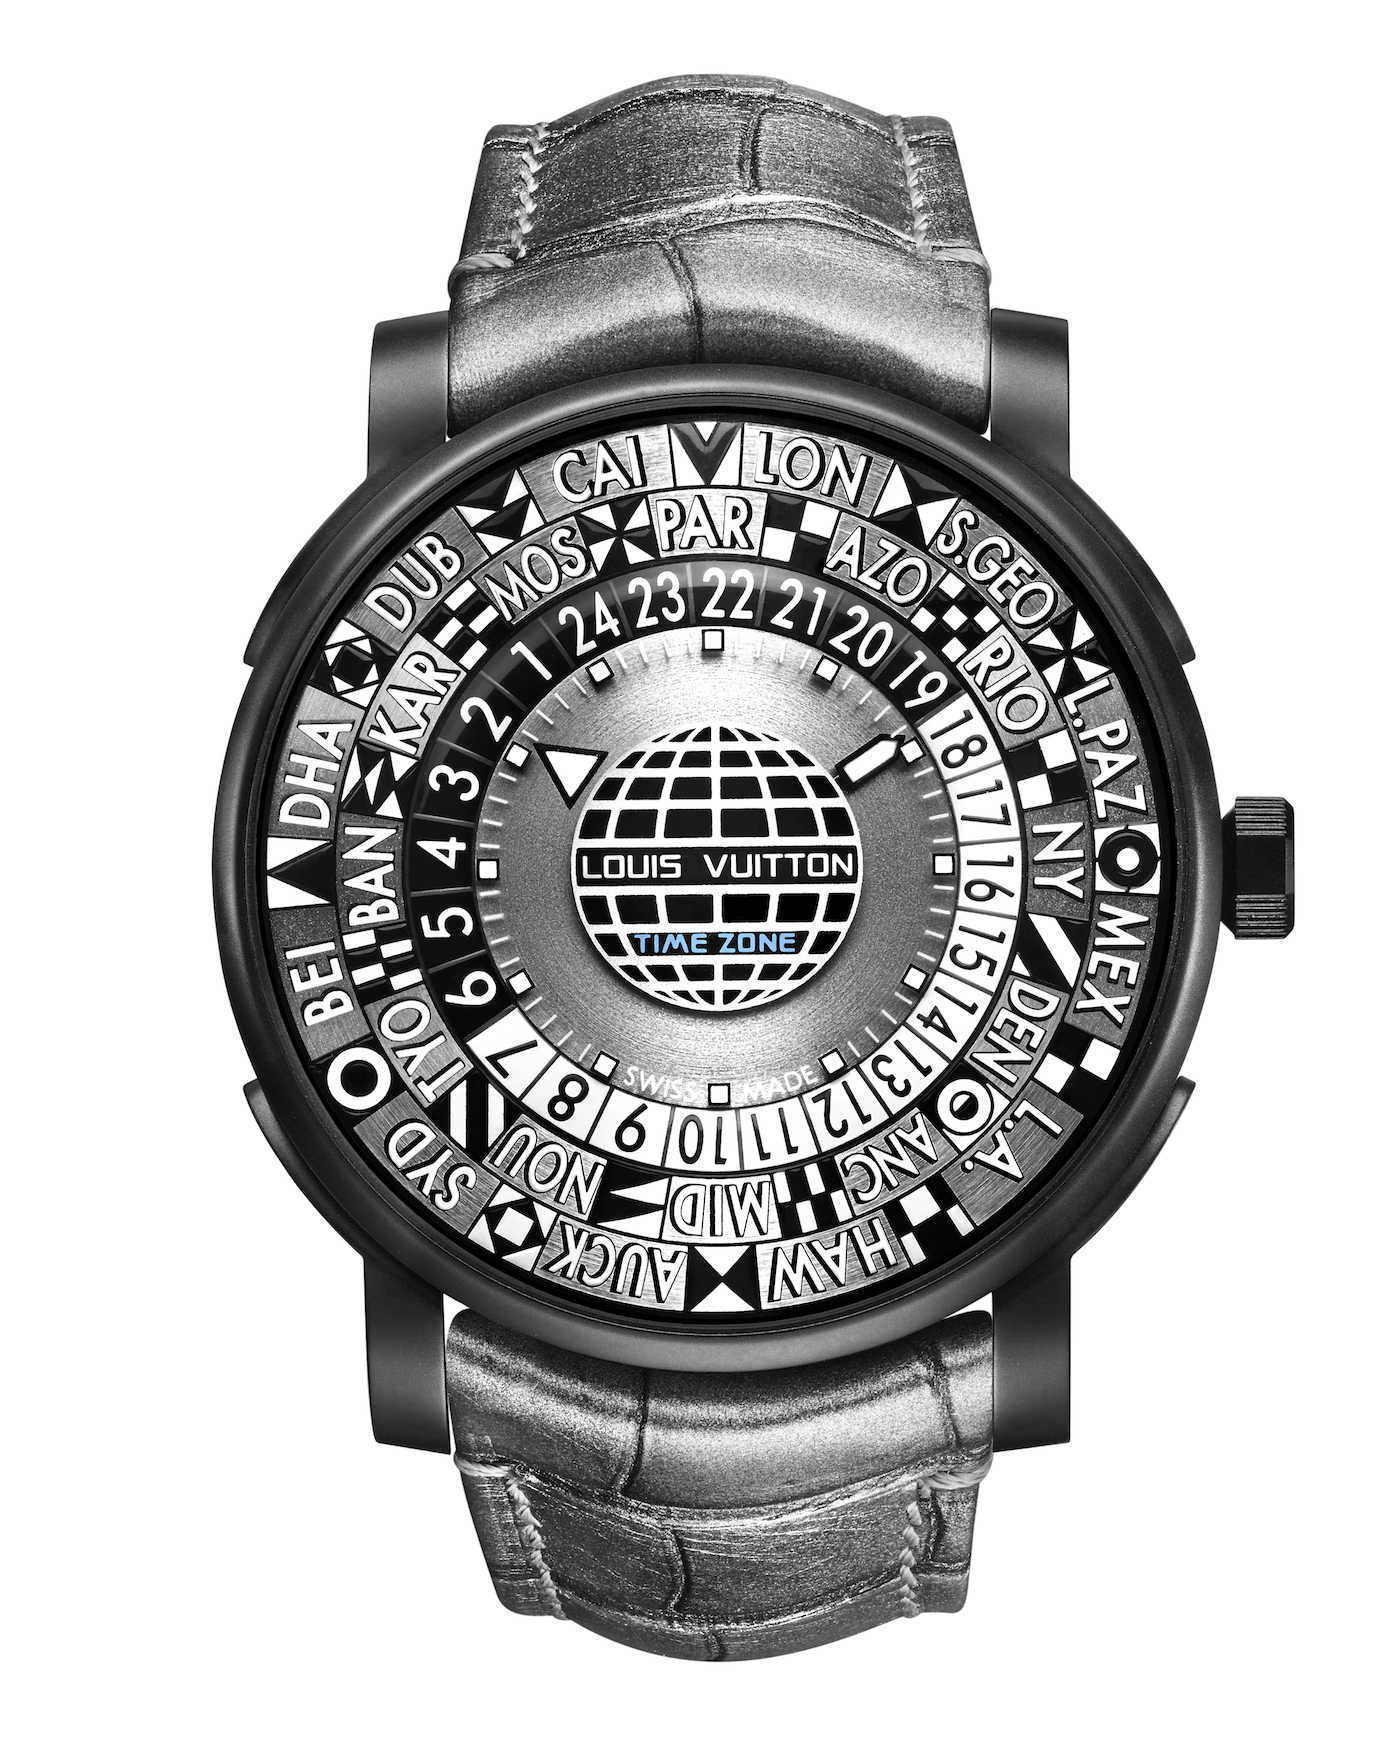 Louis-Vuitton-Escale-Time-Zone-Spacecraft-Watch